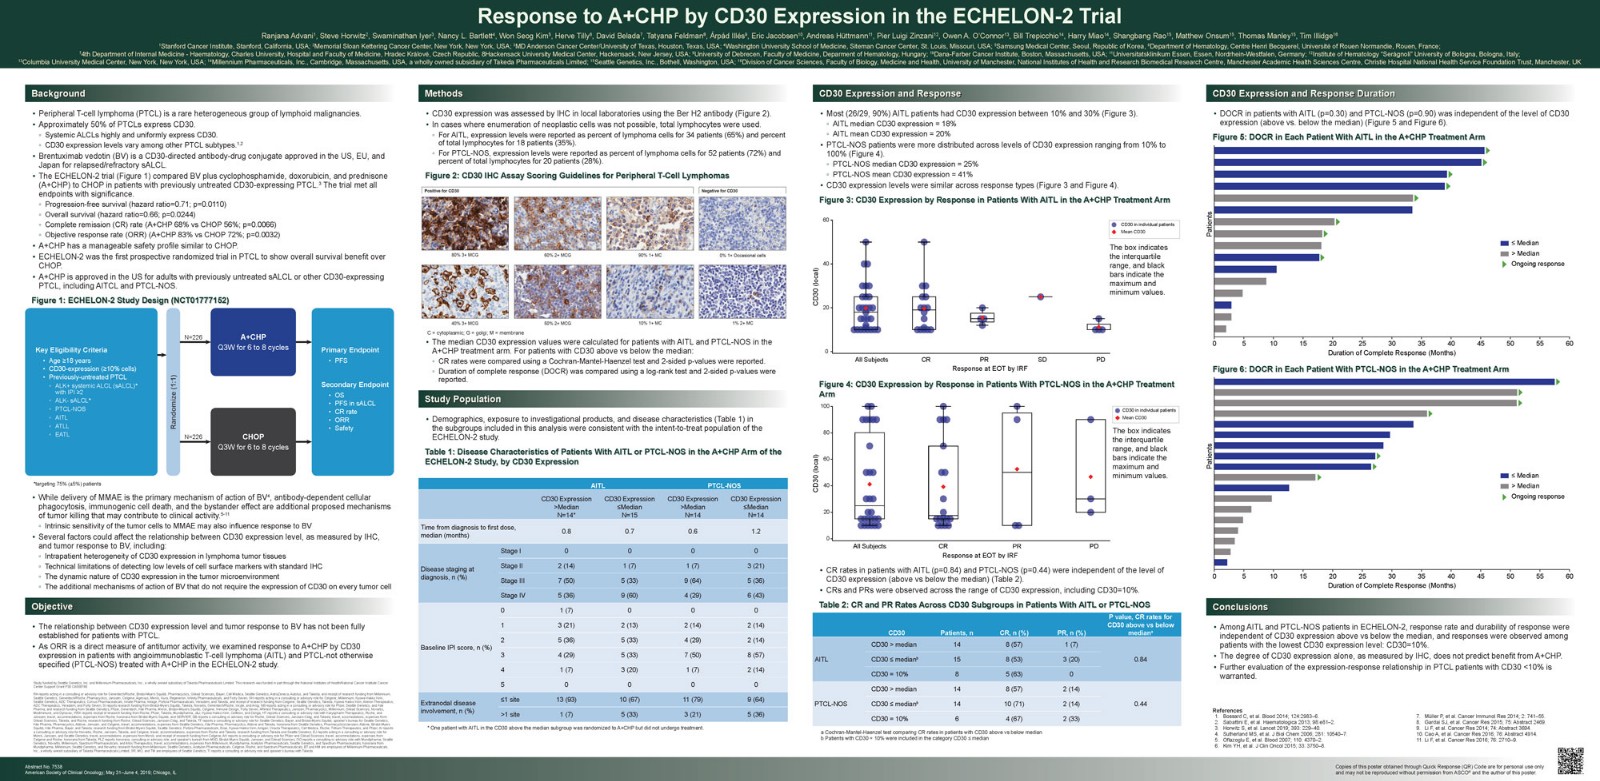 ASCO 2019：Brentuximab vedotin治疗淋巴瘤优势显著，不依赖<font color="red">CD30</font>表达